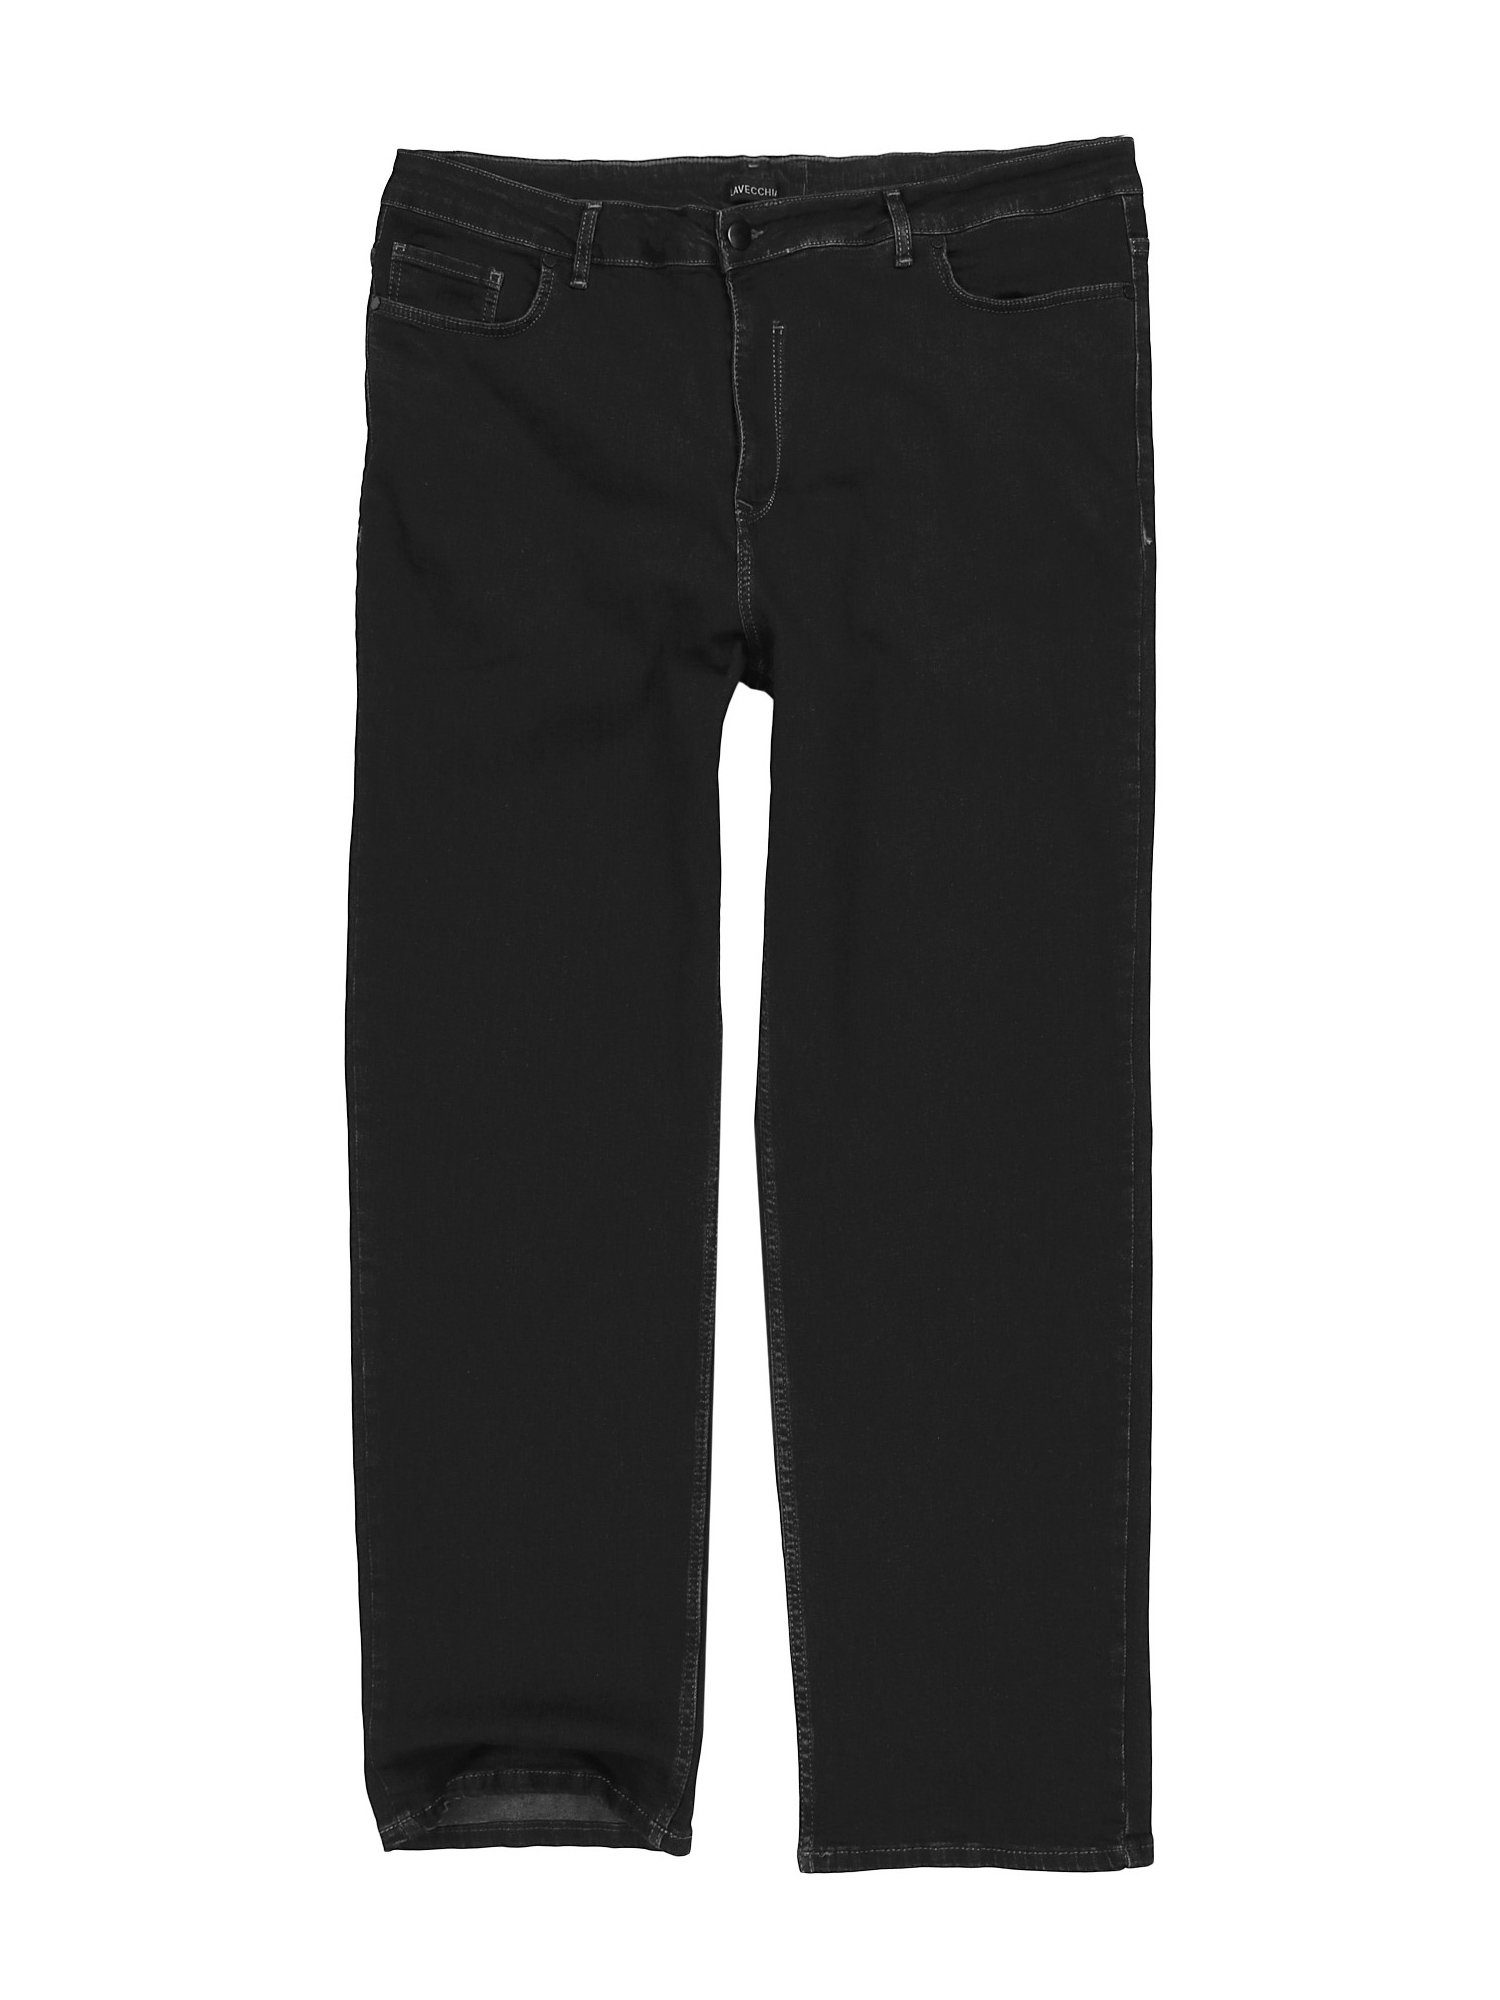 Lavecchia Comfort-fit-Jeans Übergrößen Herren Jeanshose LV-501 Stretch mit Elasthan